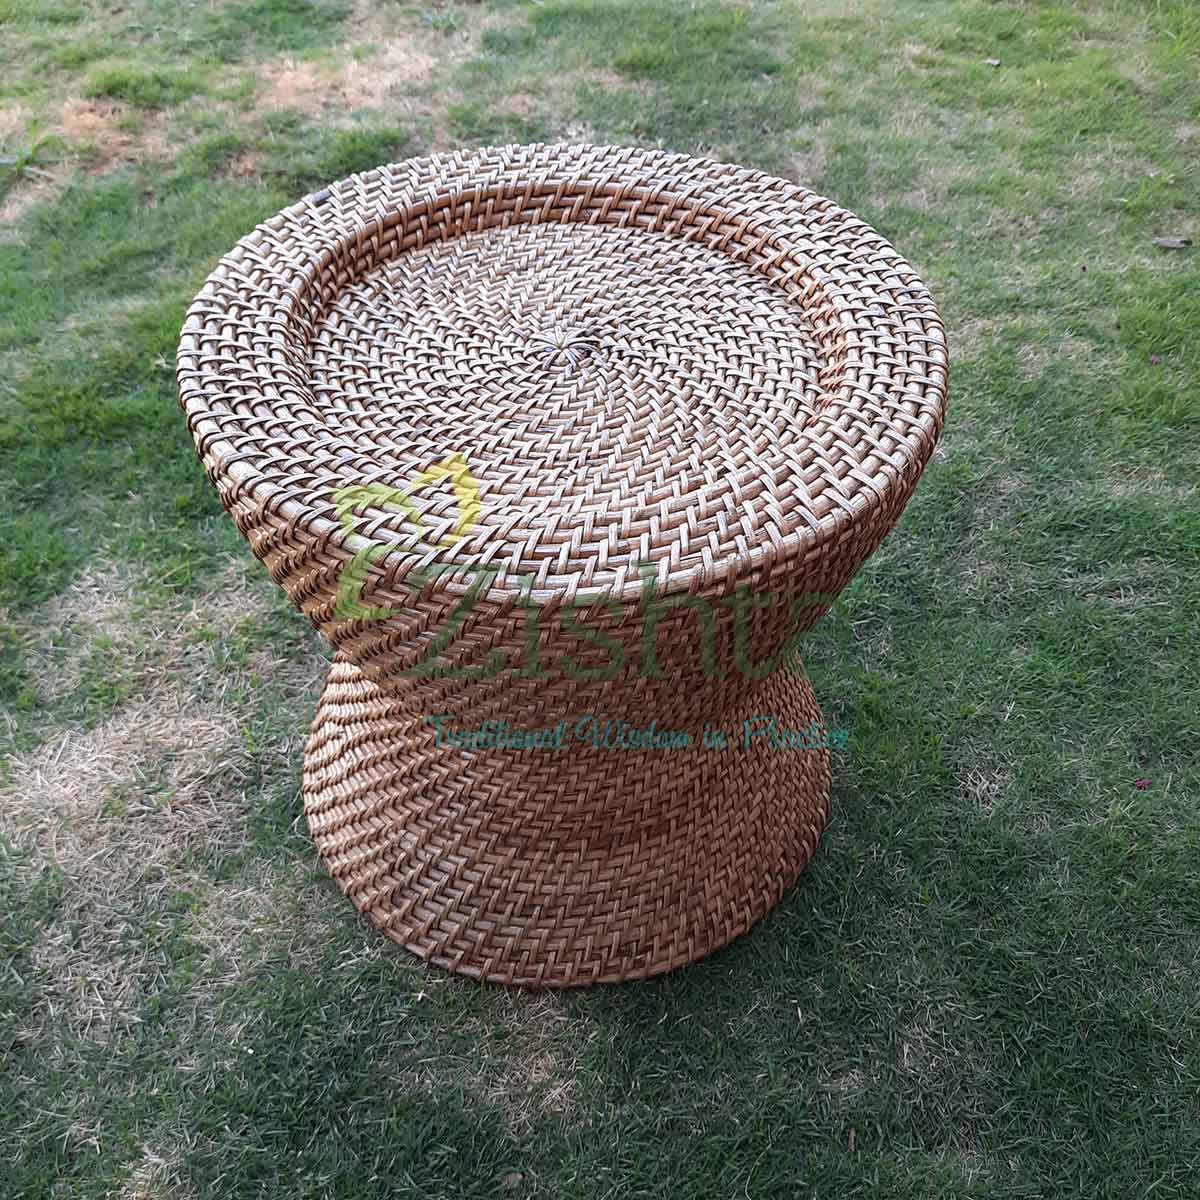 Curved Shape-Assam Cane Furniture - Seating Stool (Mudda-Morah)